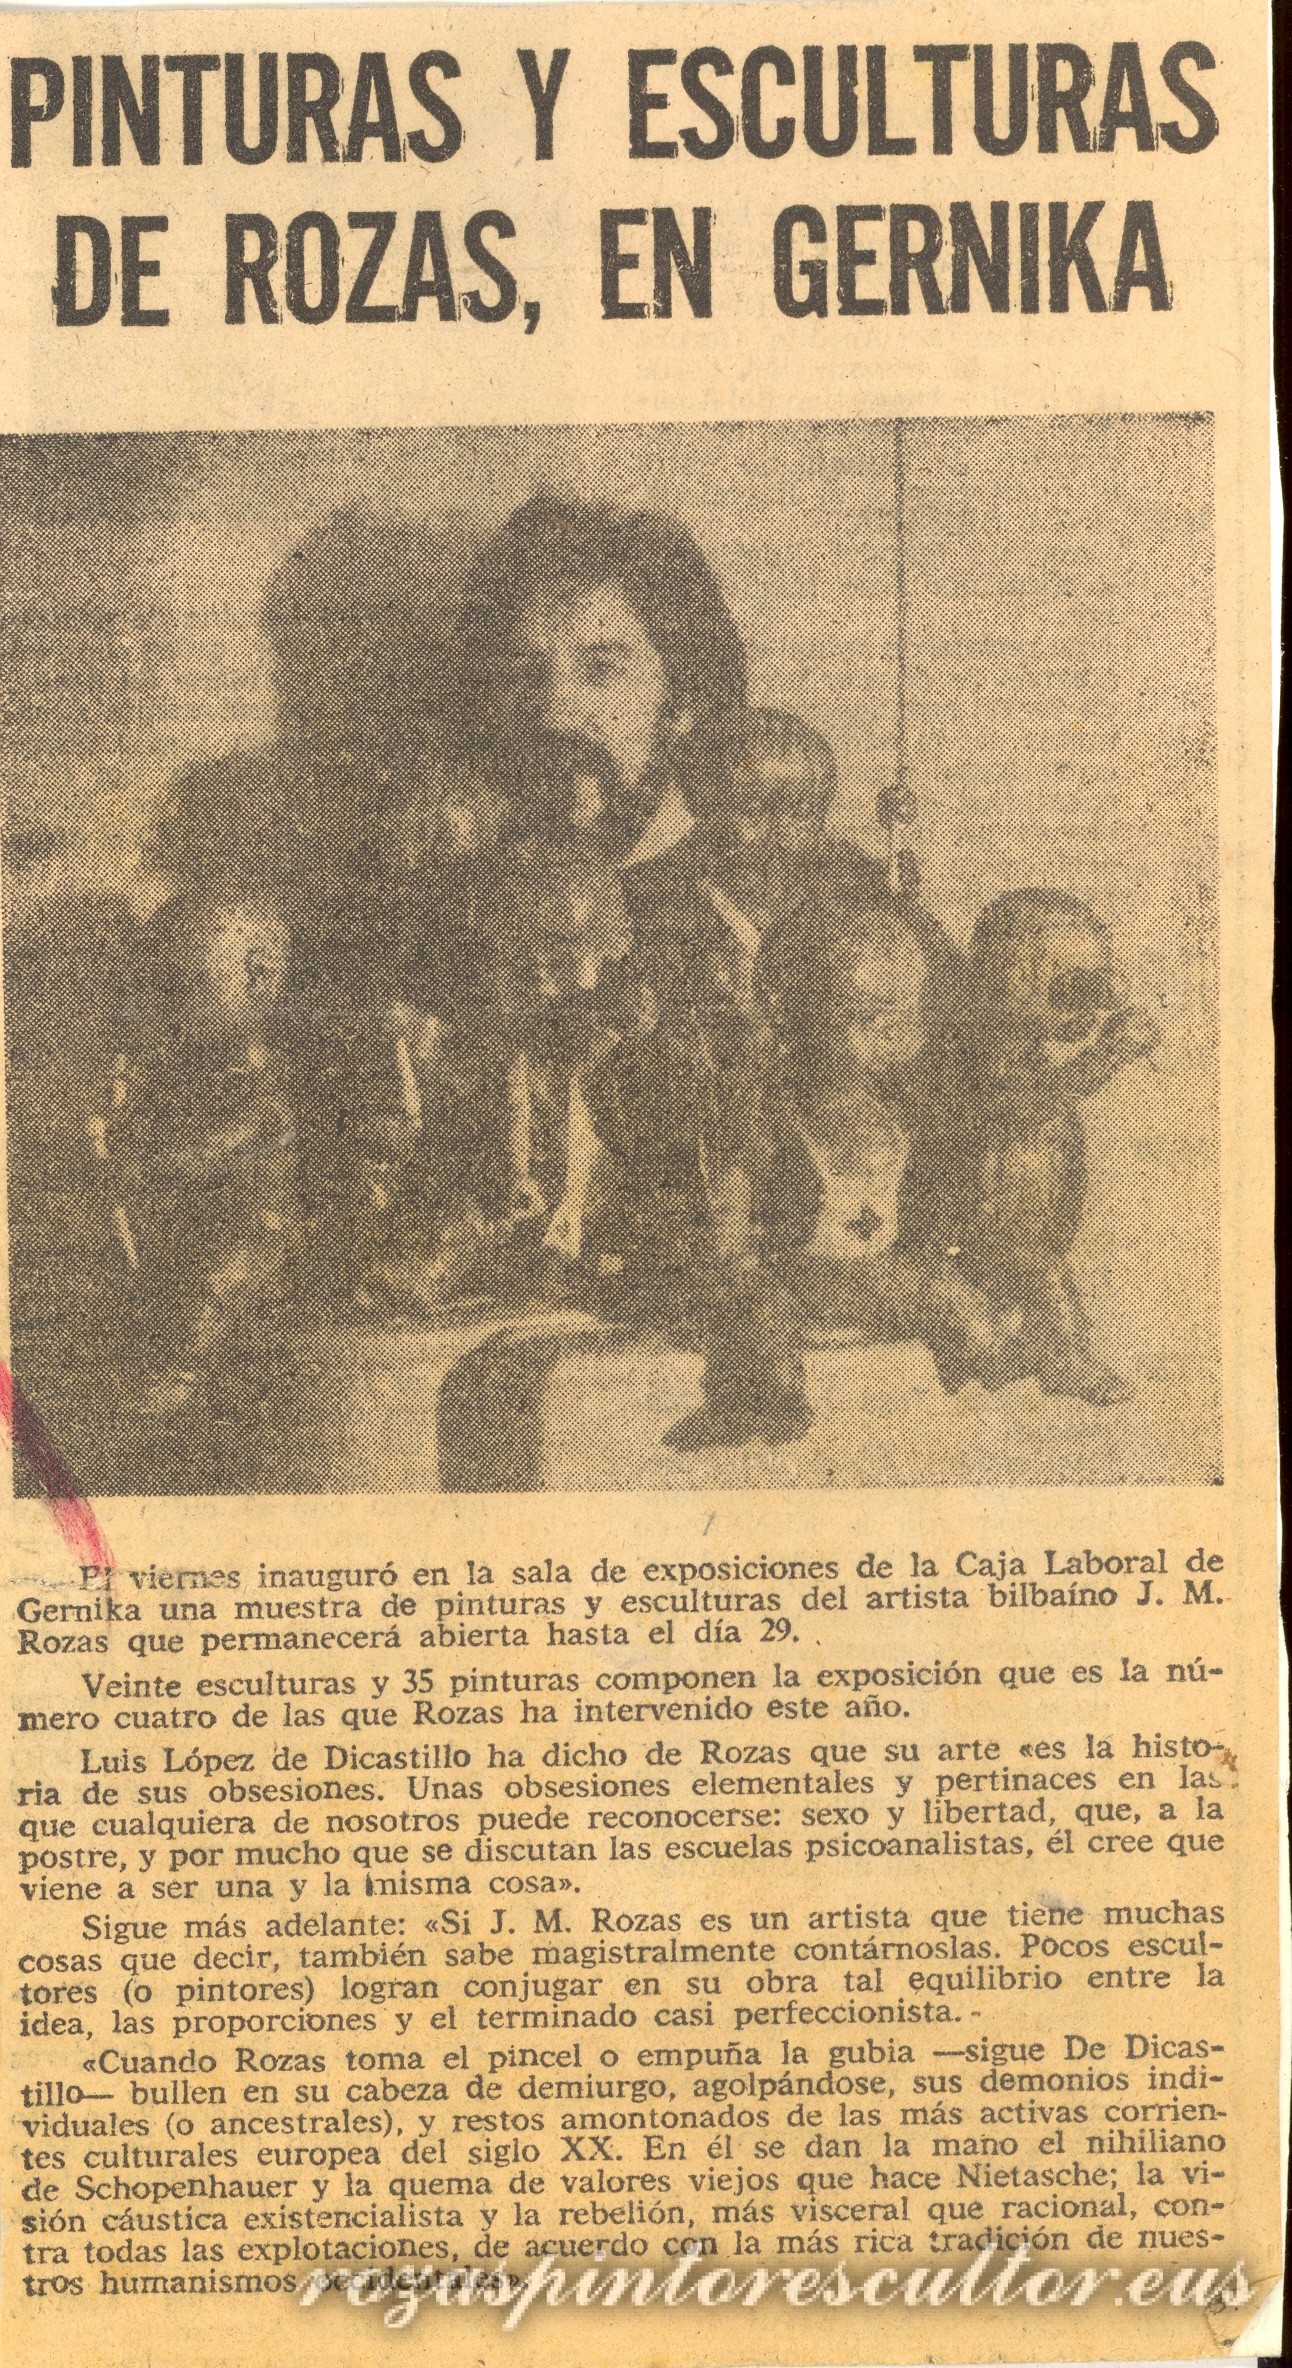 1982 El Correo – Paintings and sculptures of Rozas in Gernika